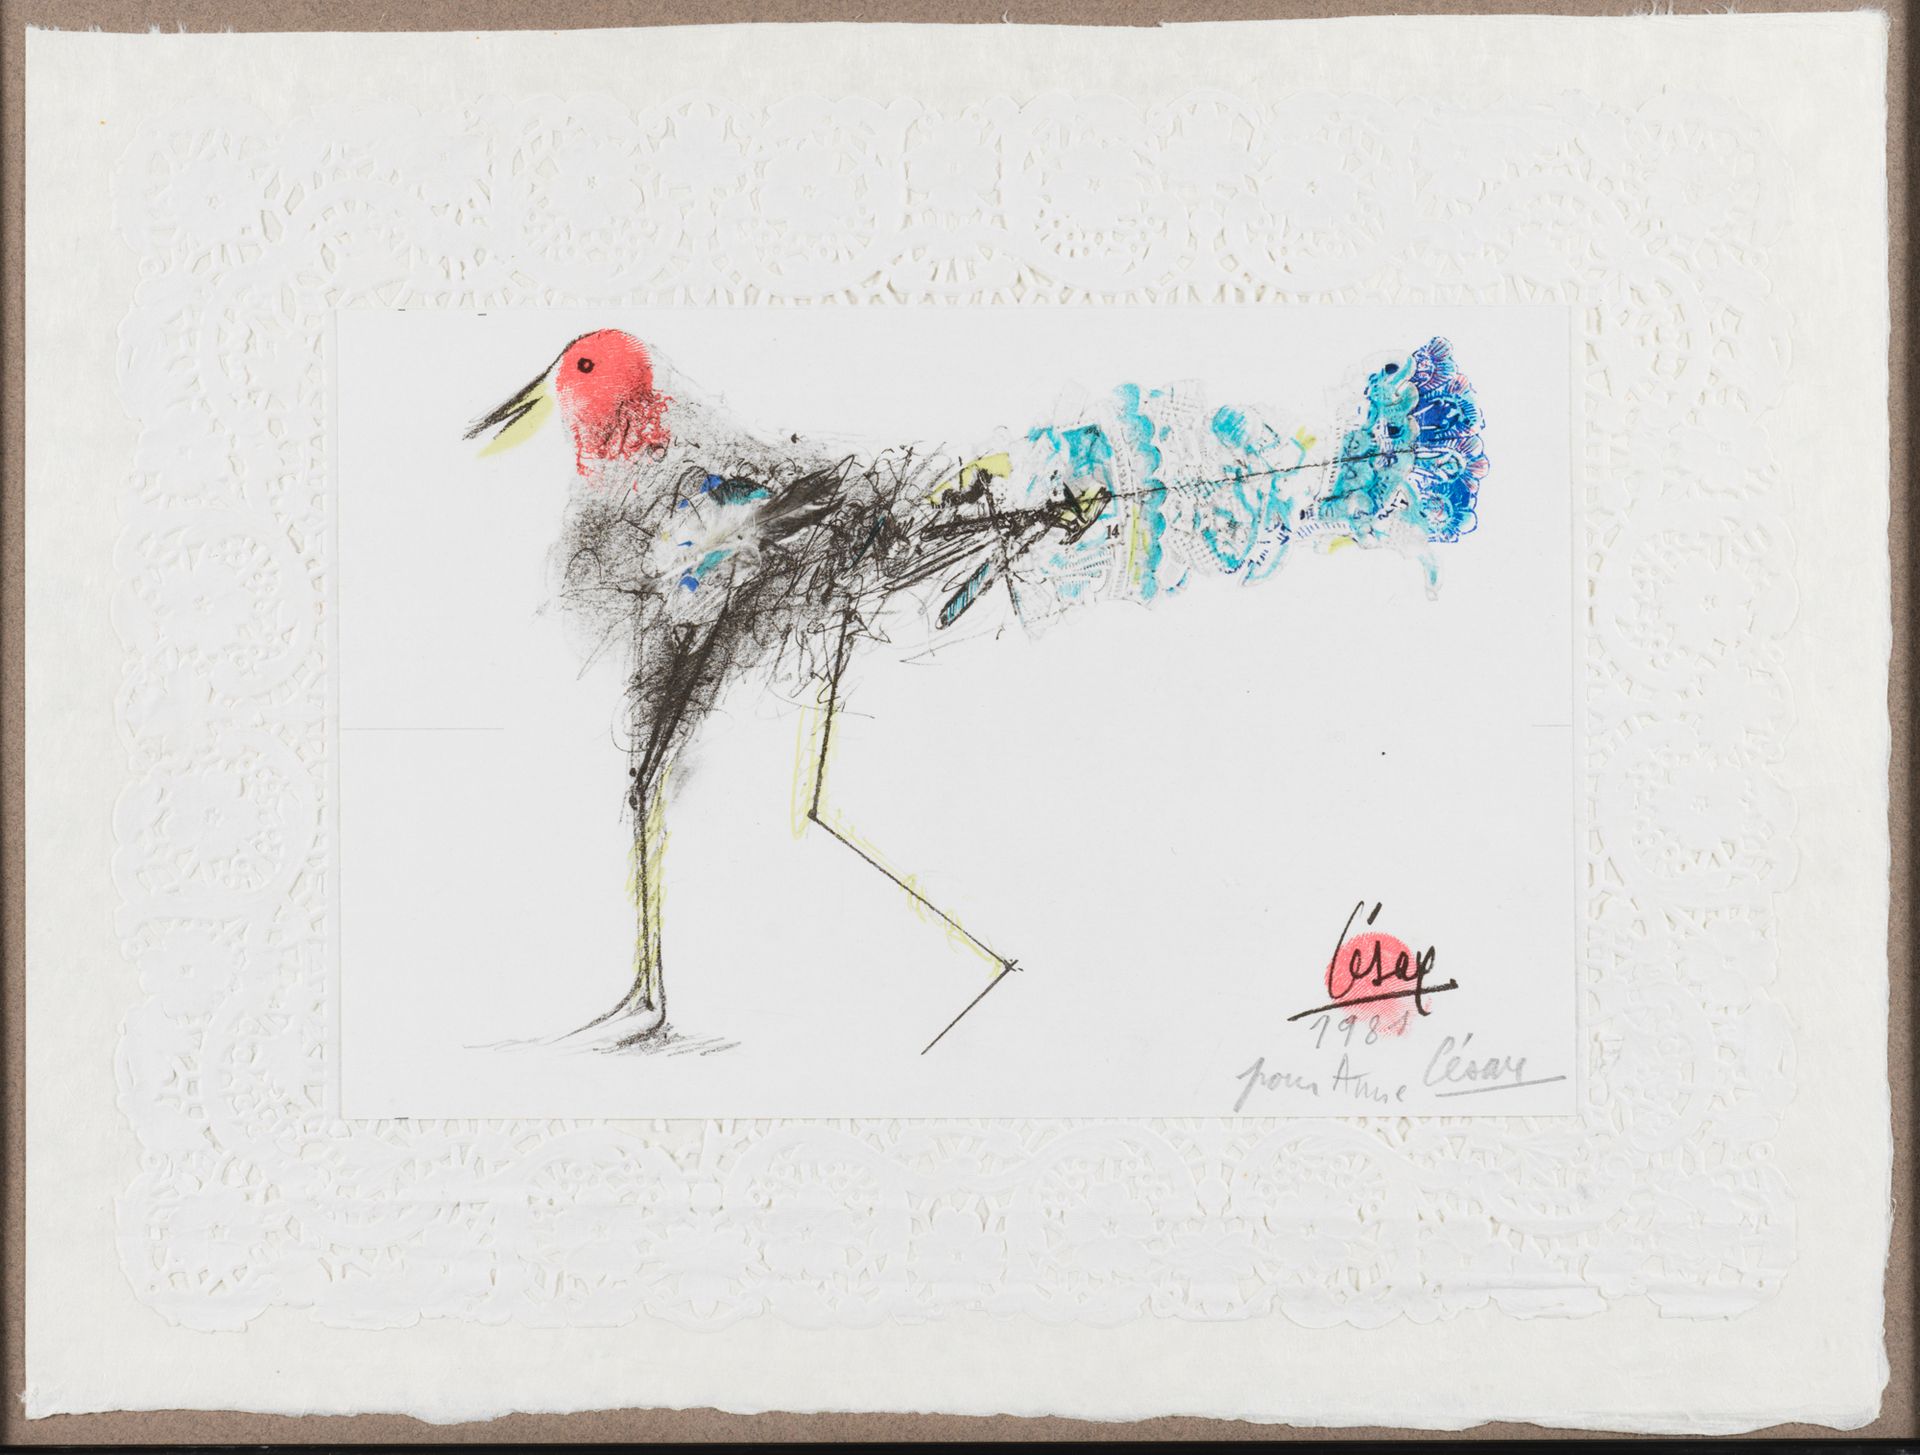 César (1921-1998) POULETTE, 1981
彩色胶印石版画，用铅笔签名并题词，纸上为百合花形式
25 x 34 cm